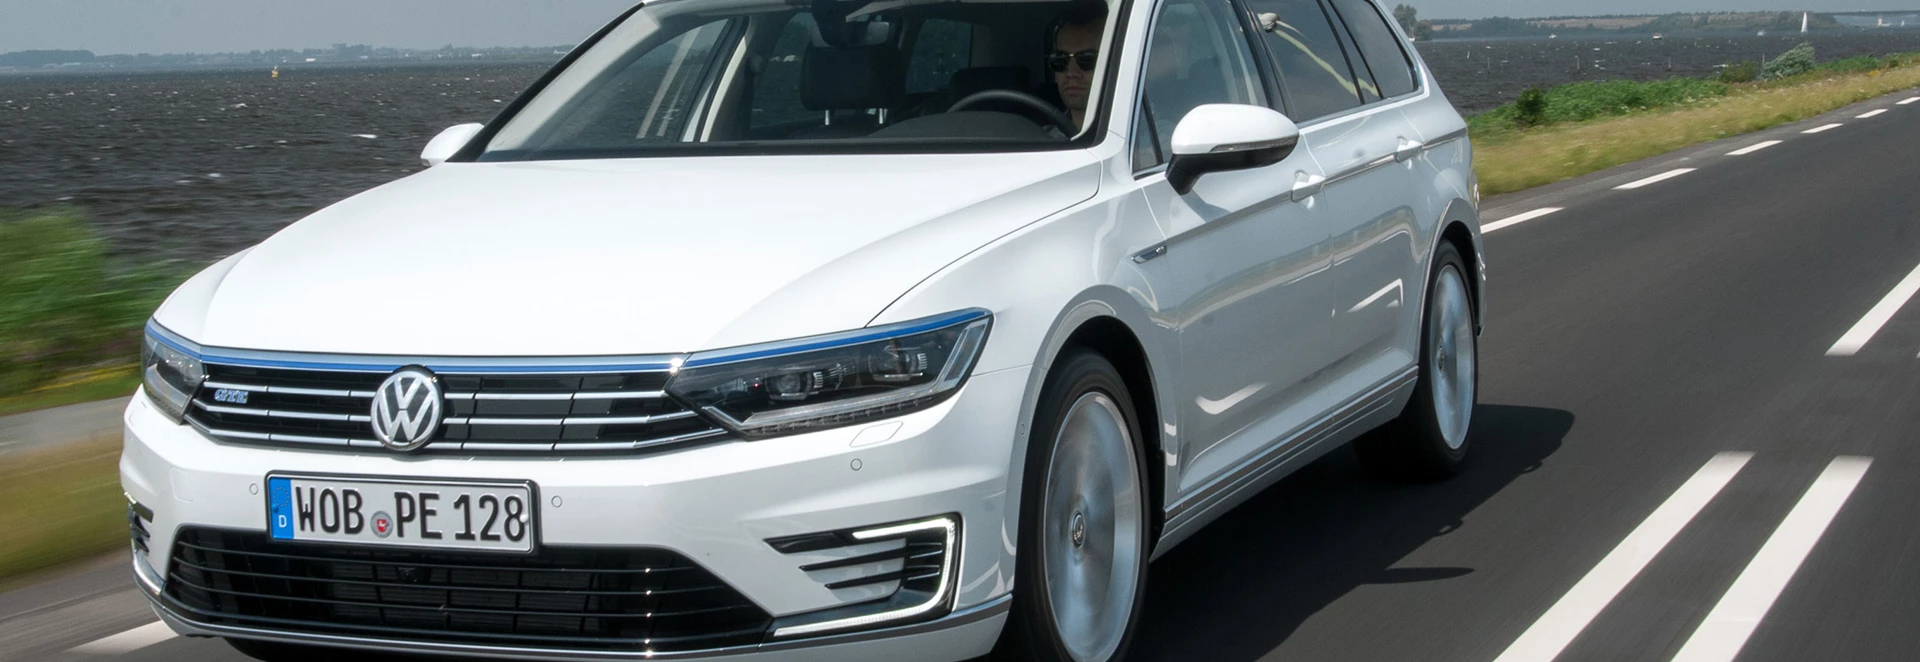 Volkswagen Passat GTE hybrid arrives in UK, priced from £34,025